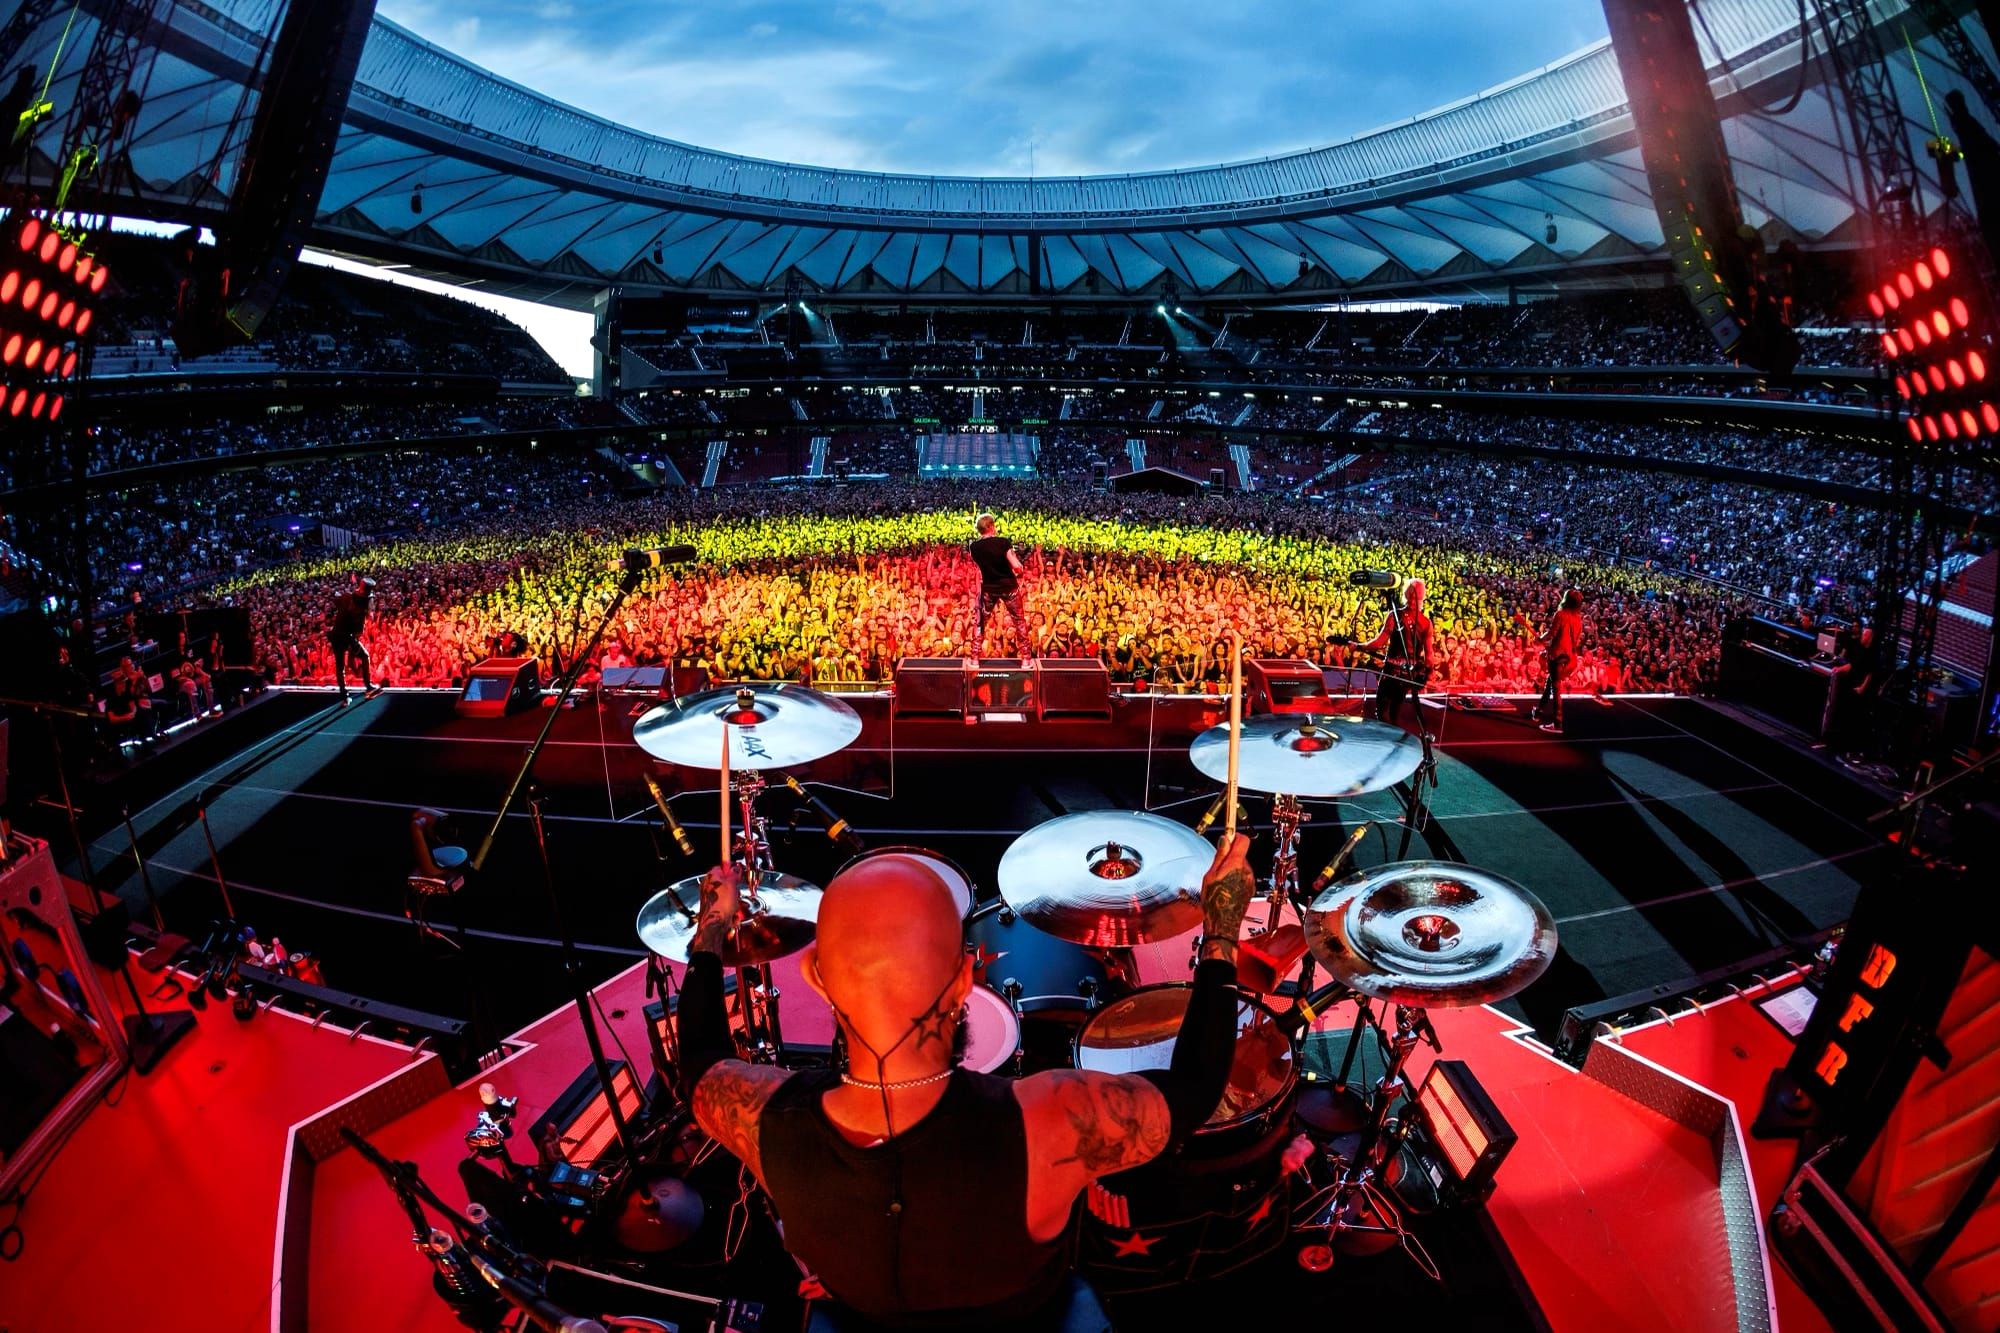 Guns n'Roses demuestran en Madrid que la nostalgia del rock sigue llenando estadios